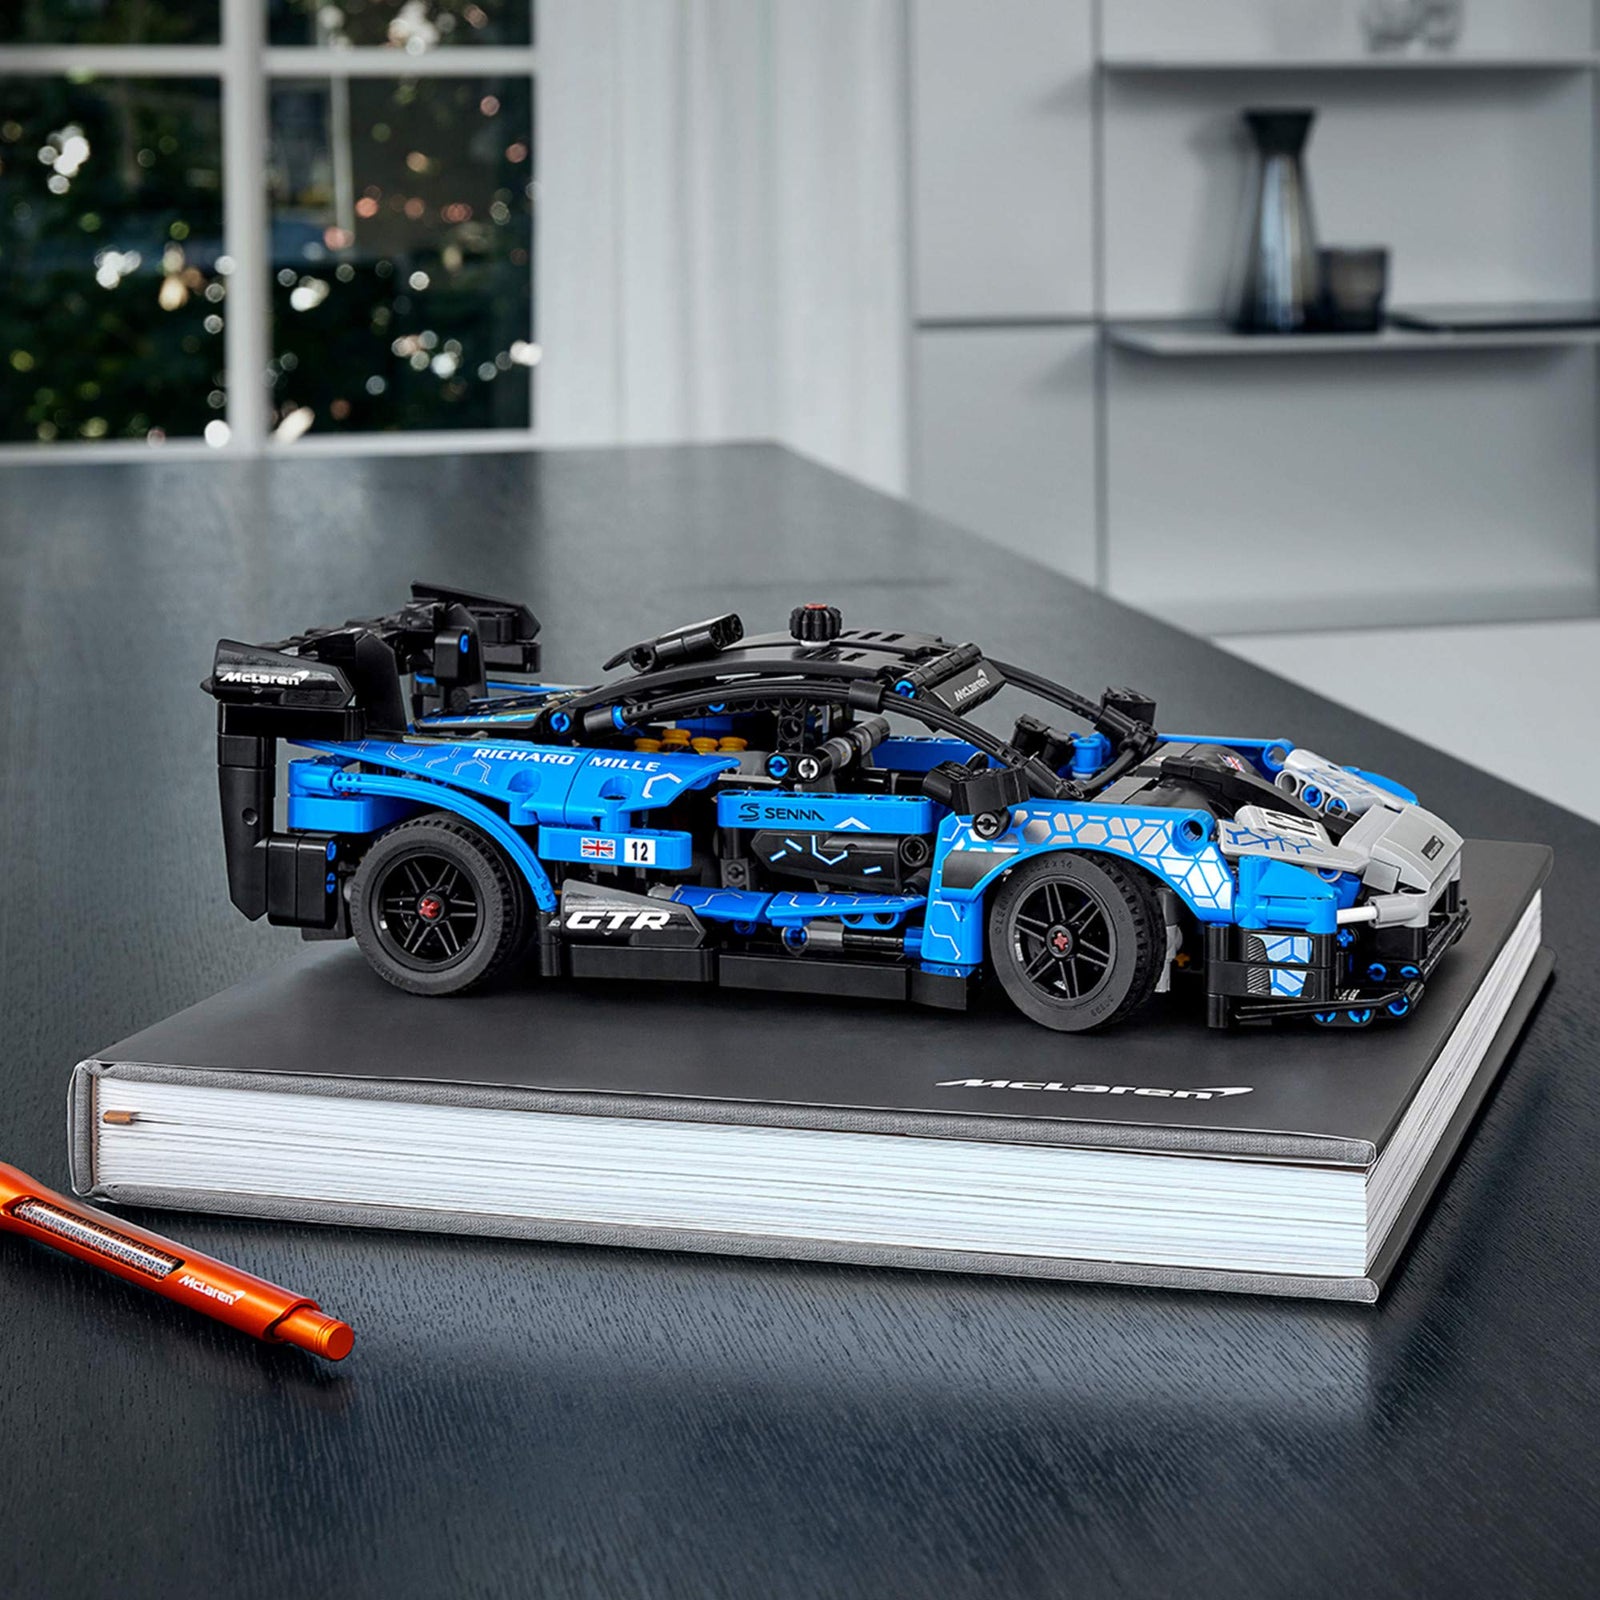 LEGO Technic McLaren Senna GTR 42123 Toy Car Model Building Kit; Build and Display an Authentic McLaren Supercar, New 2021 (830 Pieces)